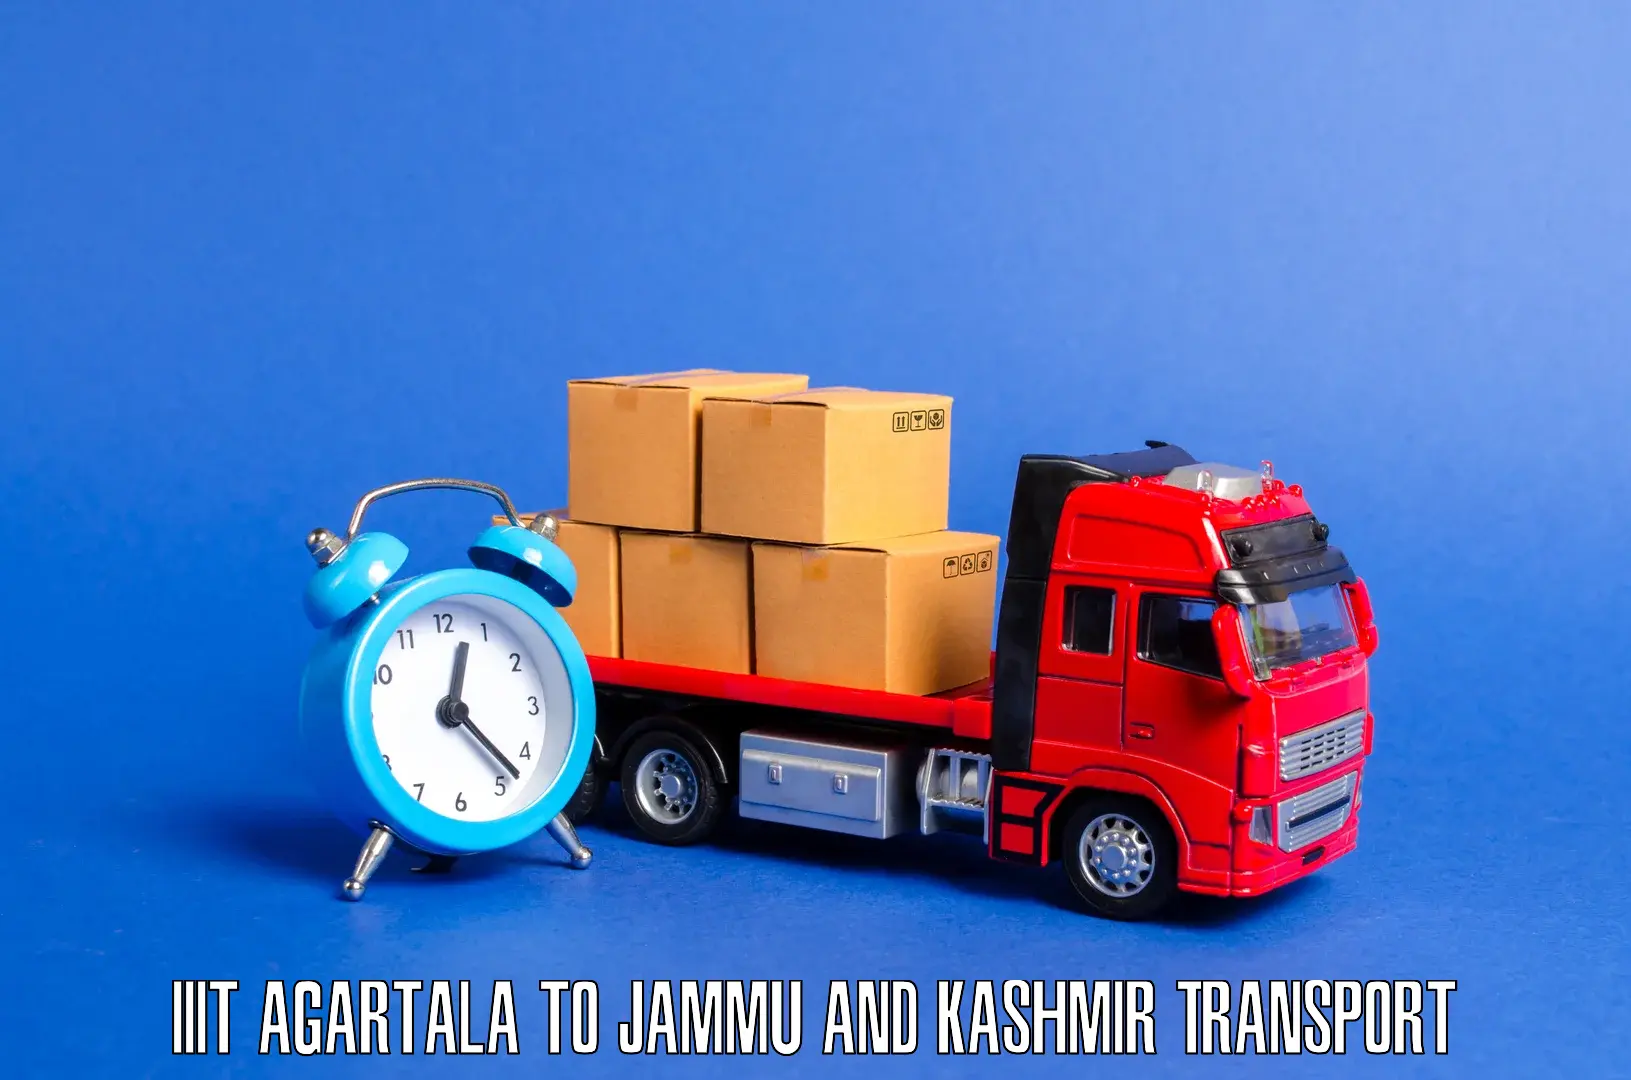 Express transport services in IIIT Agartala to Srinagar Kashmir